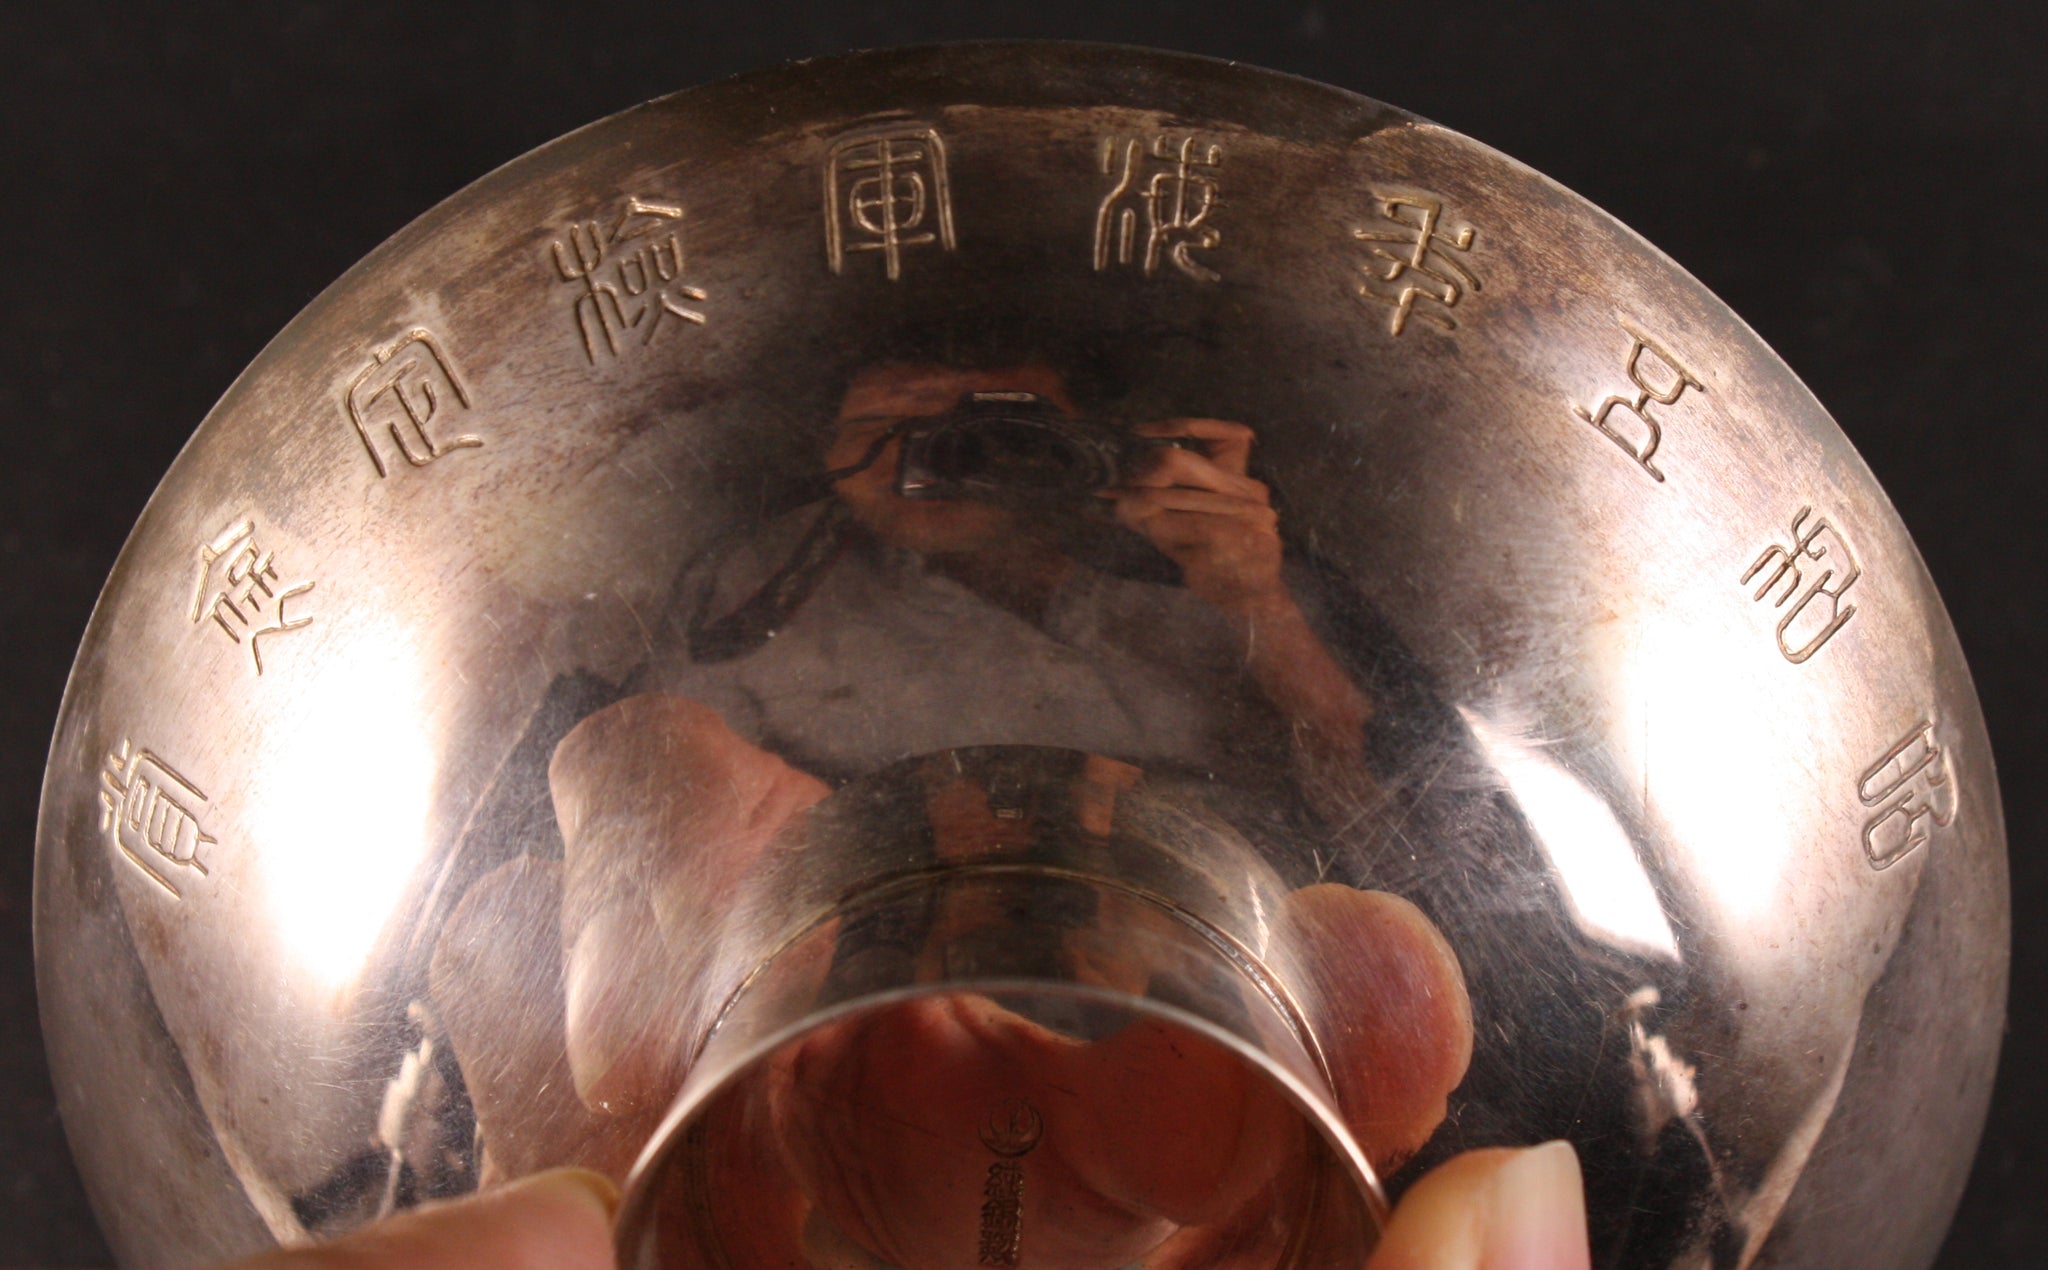 Rare Antique Japanese Military 1930 Navy Test Award Silver Sake Cup